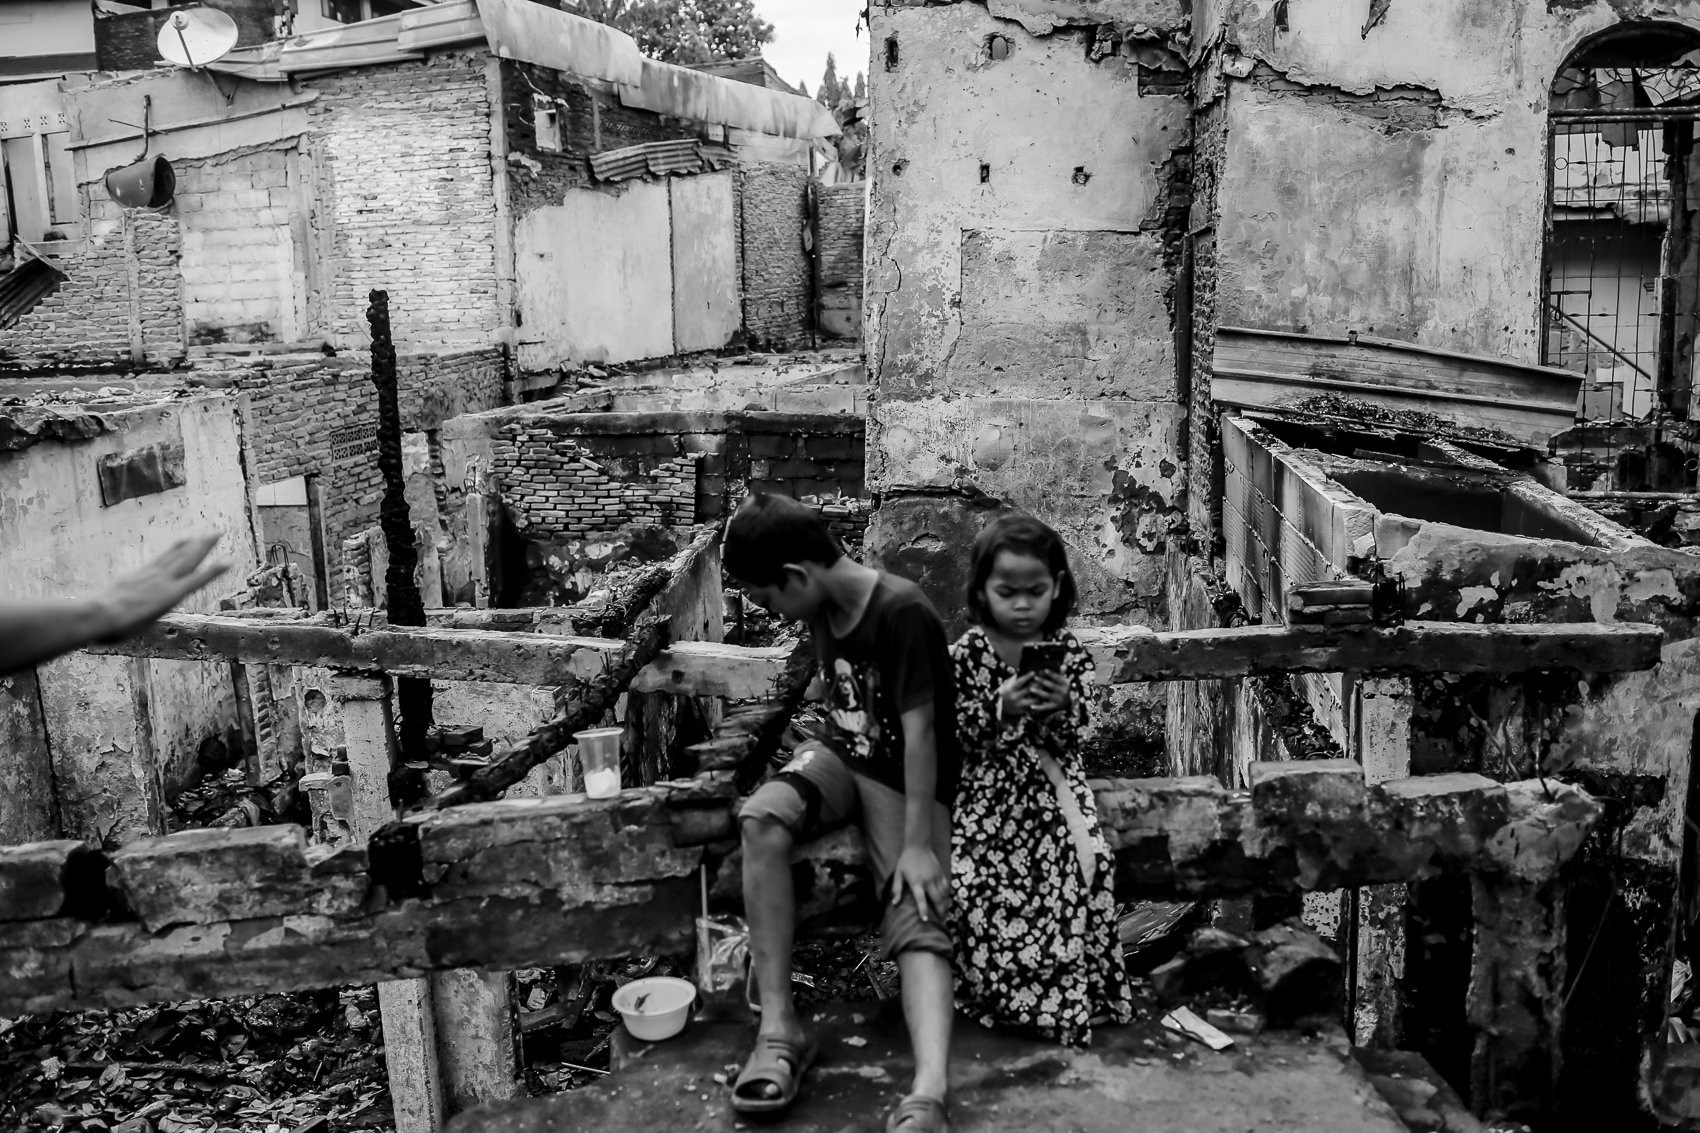 Dua orang anak bermain di depan rumahnya yang terbakar, Pasar Gembrong, Jakarta, Rabu (4/5/2022). Luas area yang terbakar mencapai 1.200 meter persegi. Sebanyak 26 unit mobil pemadam beserta 130 personel diterjunkan ke lokasi untuk memadamkan api saat kejadian.